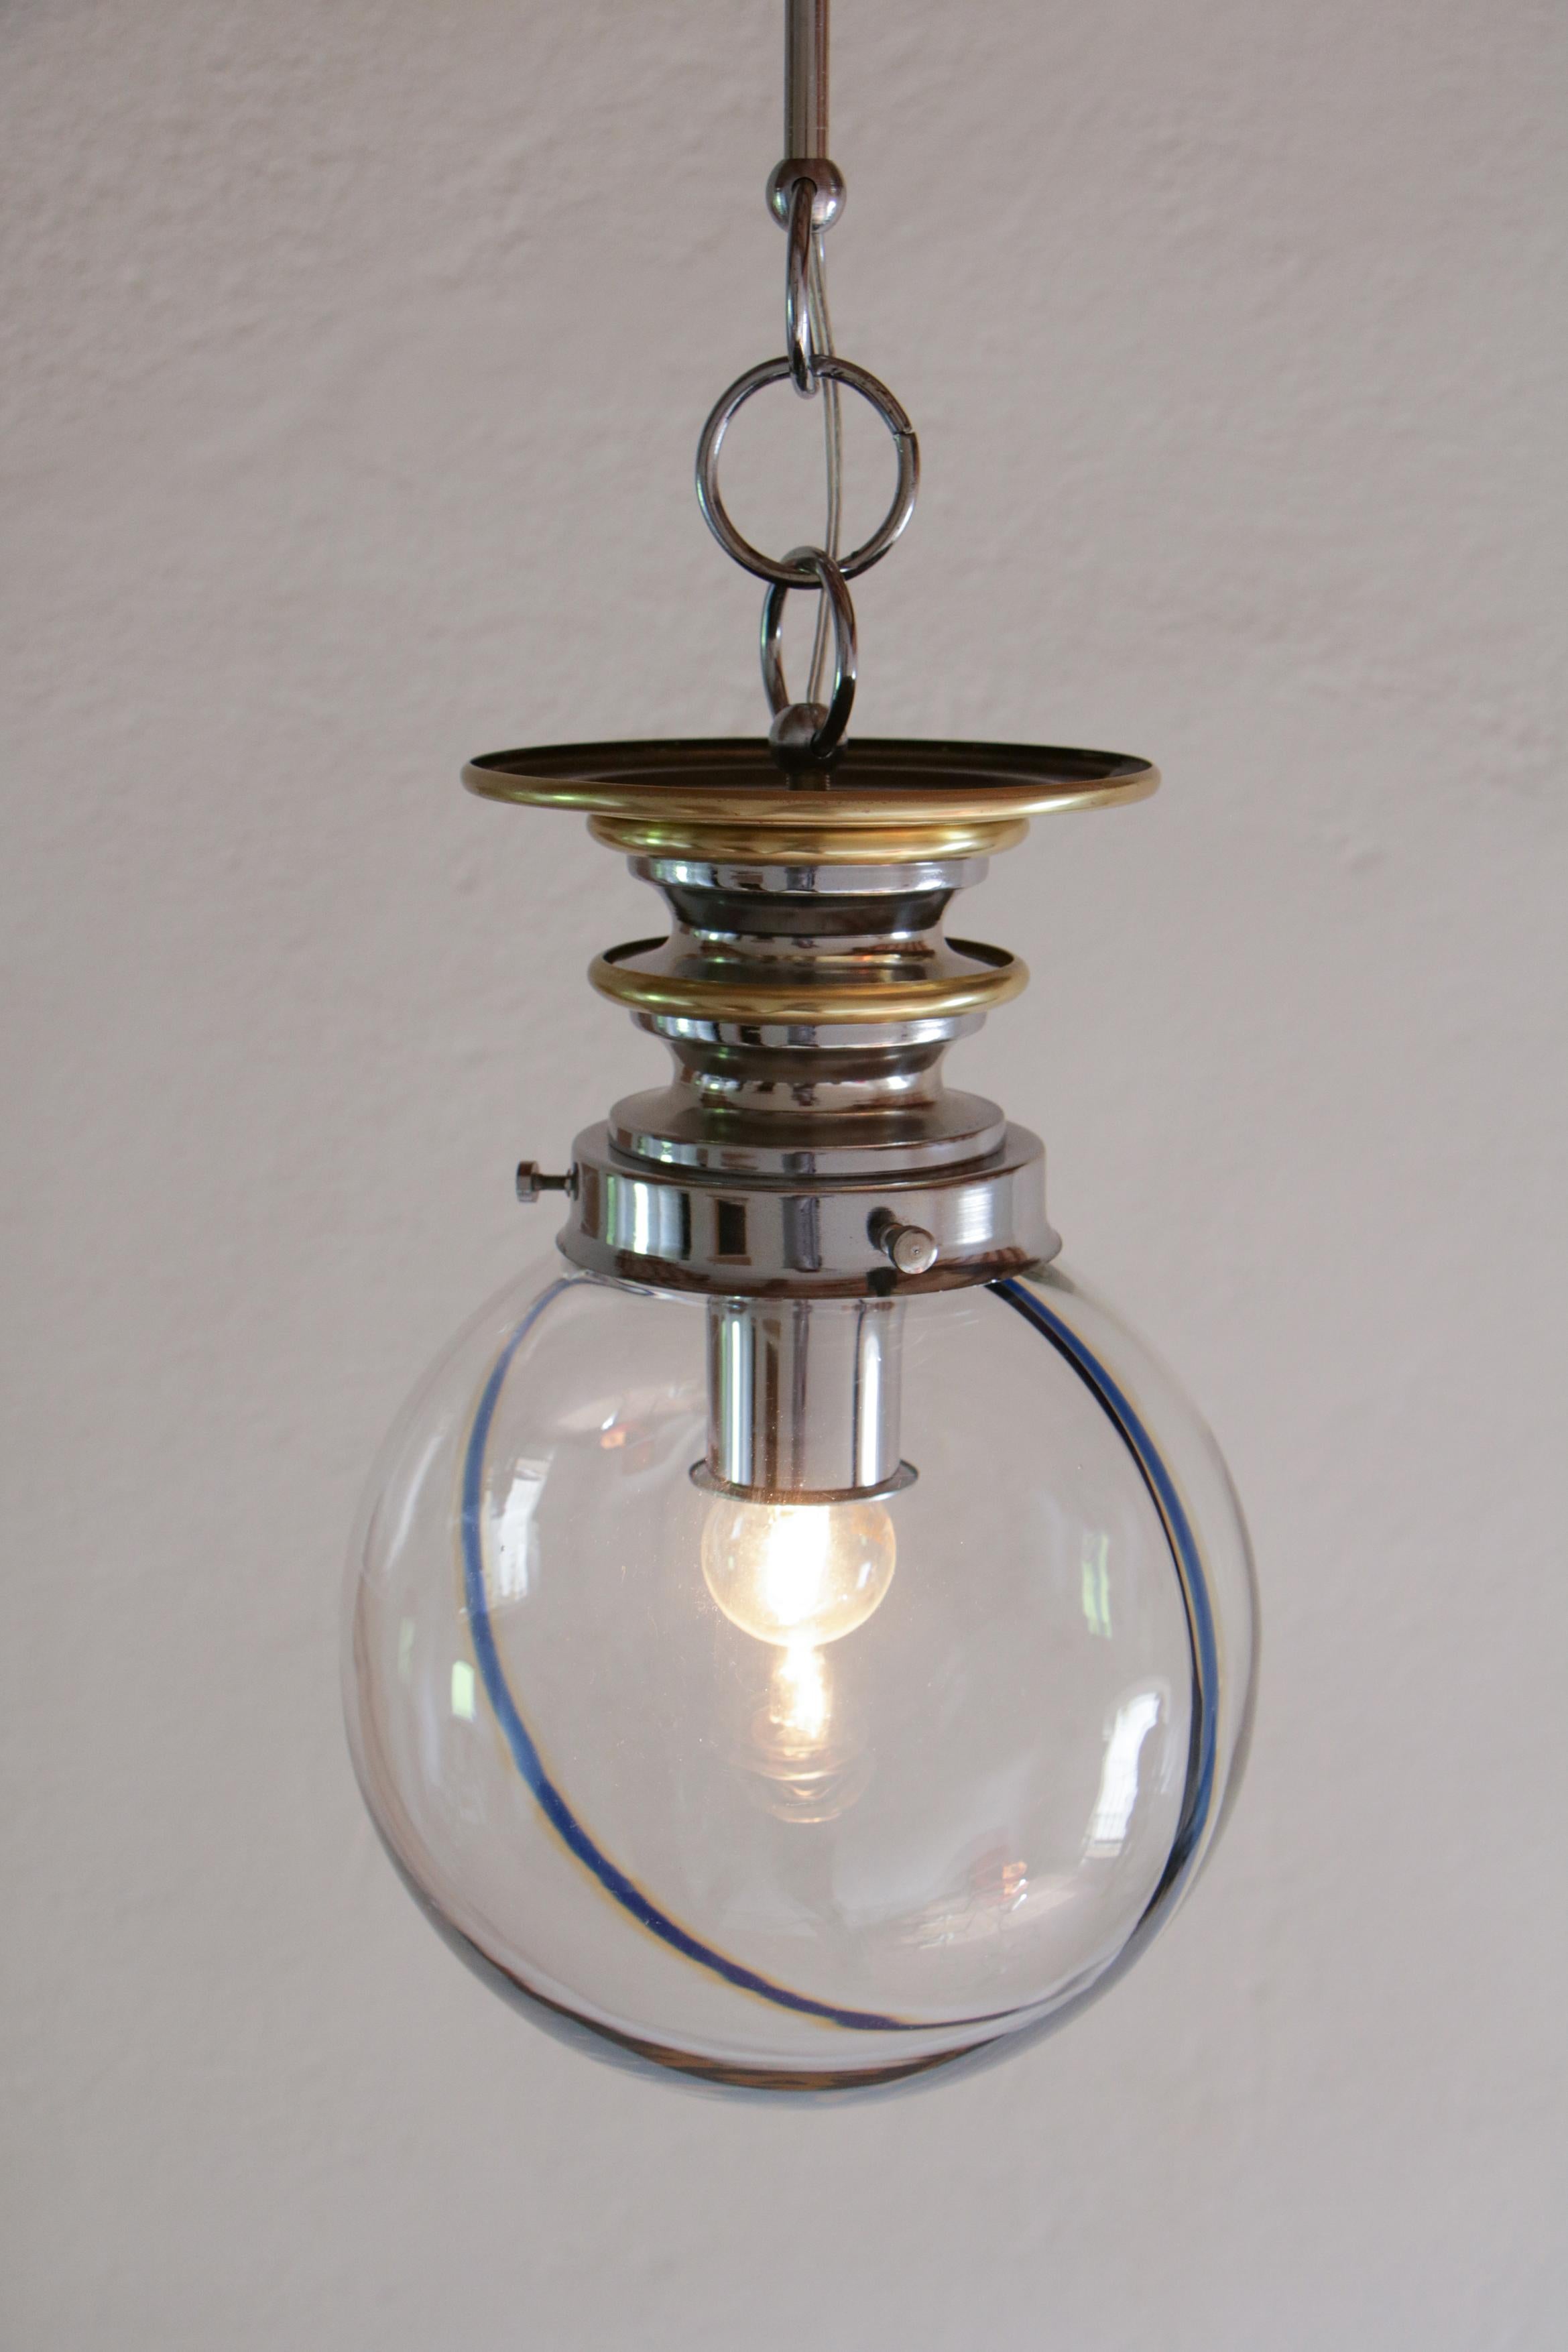 Italian Mid-Century Modern Murano Ball Glass Pendant Lamp, Blue Wire, 1970s In Good Condition For Sale In Traversetolo, IT